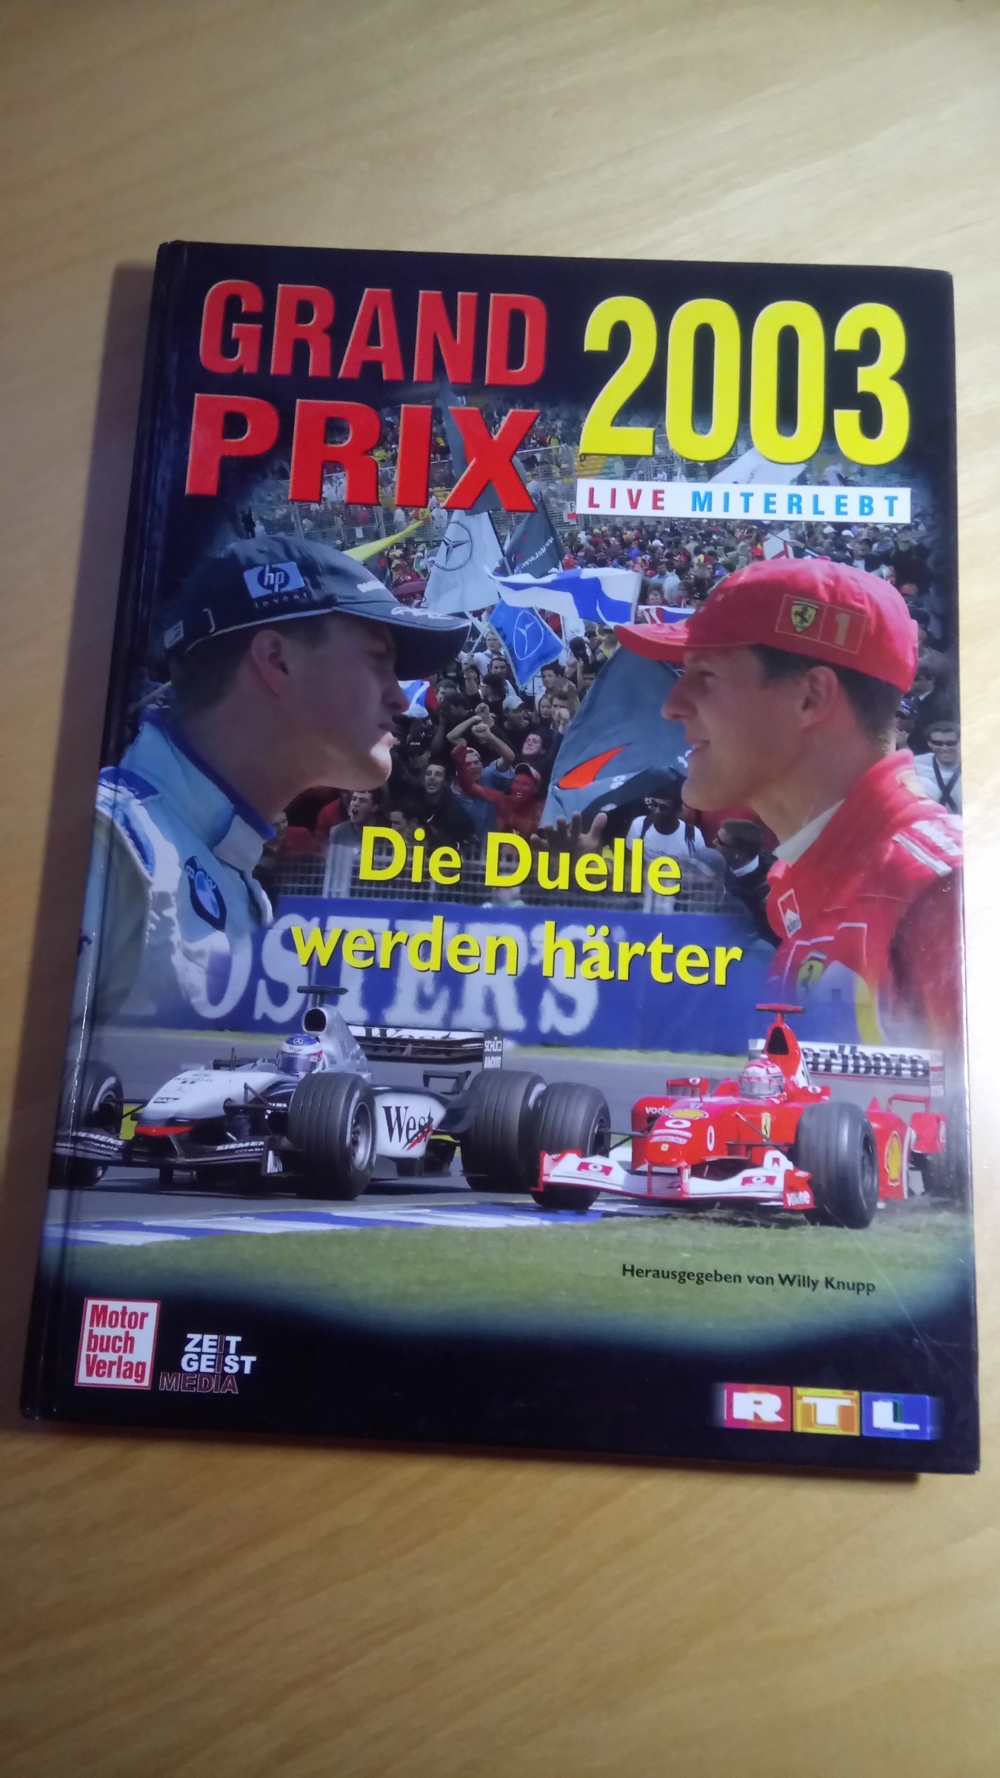 Grand Prix 2003 - live miterlebt